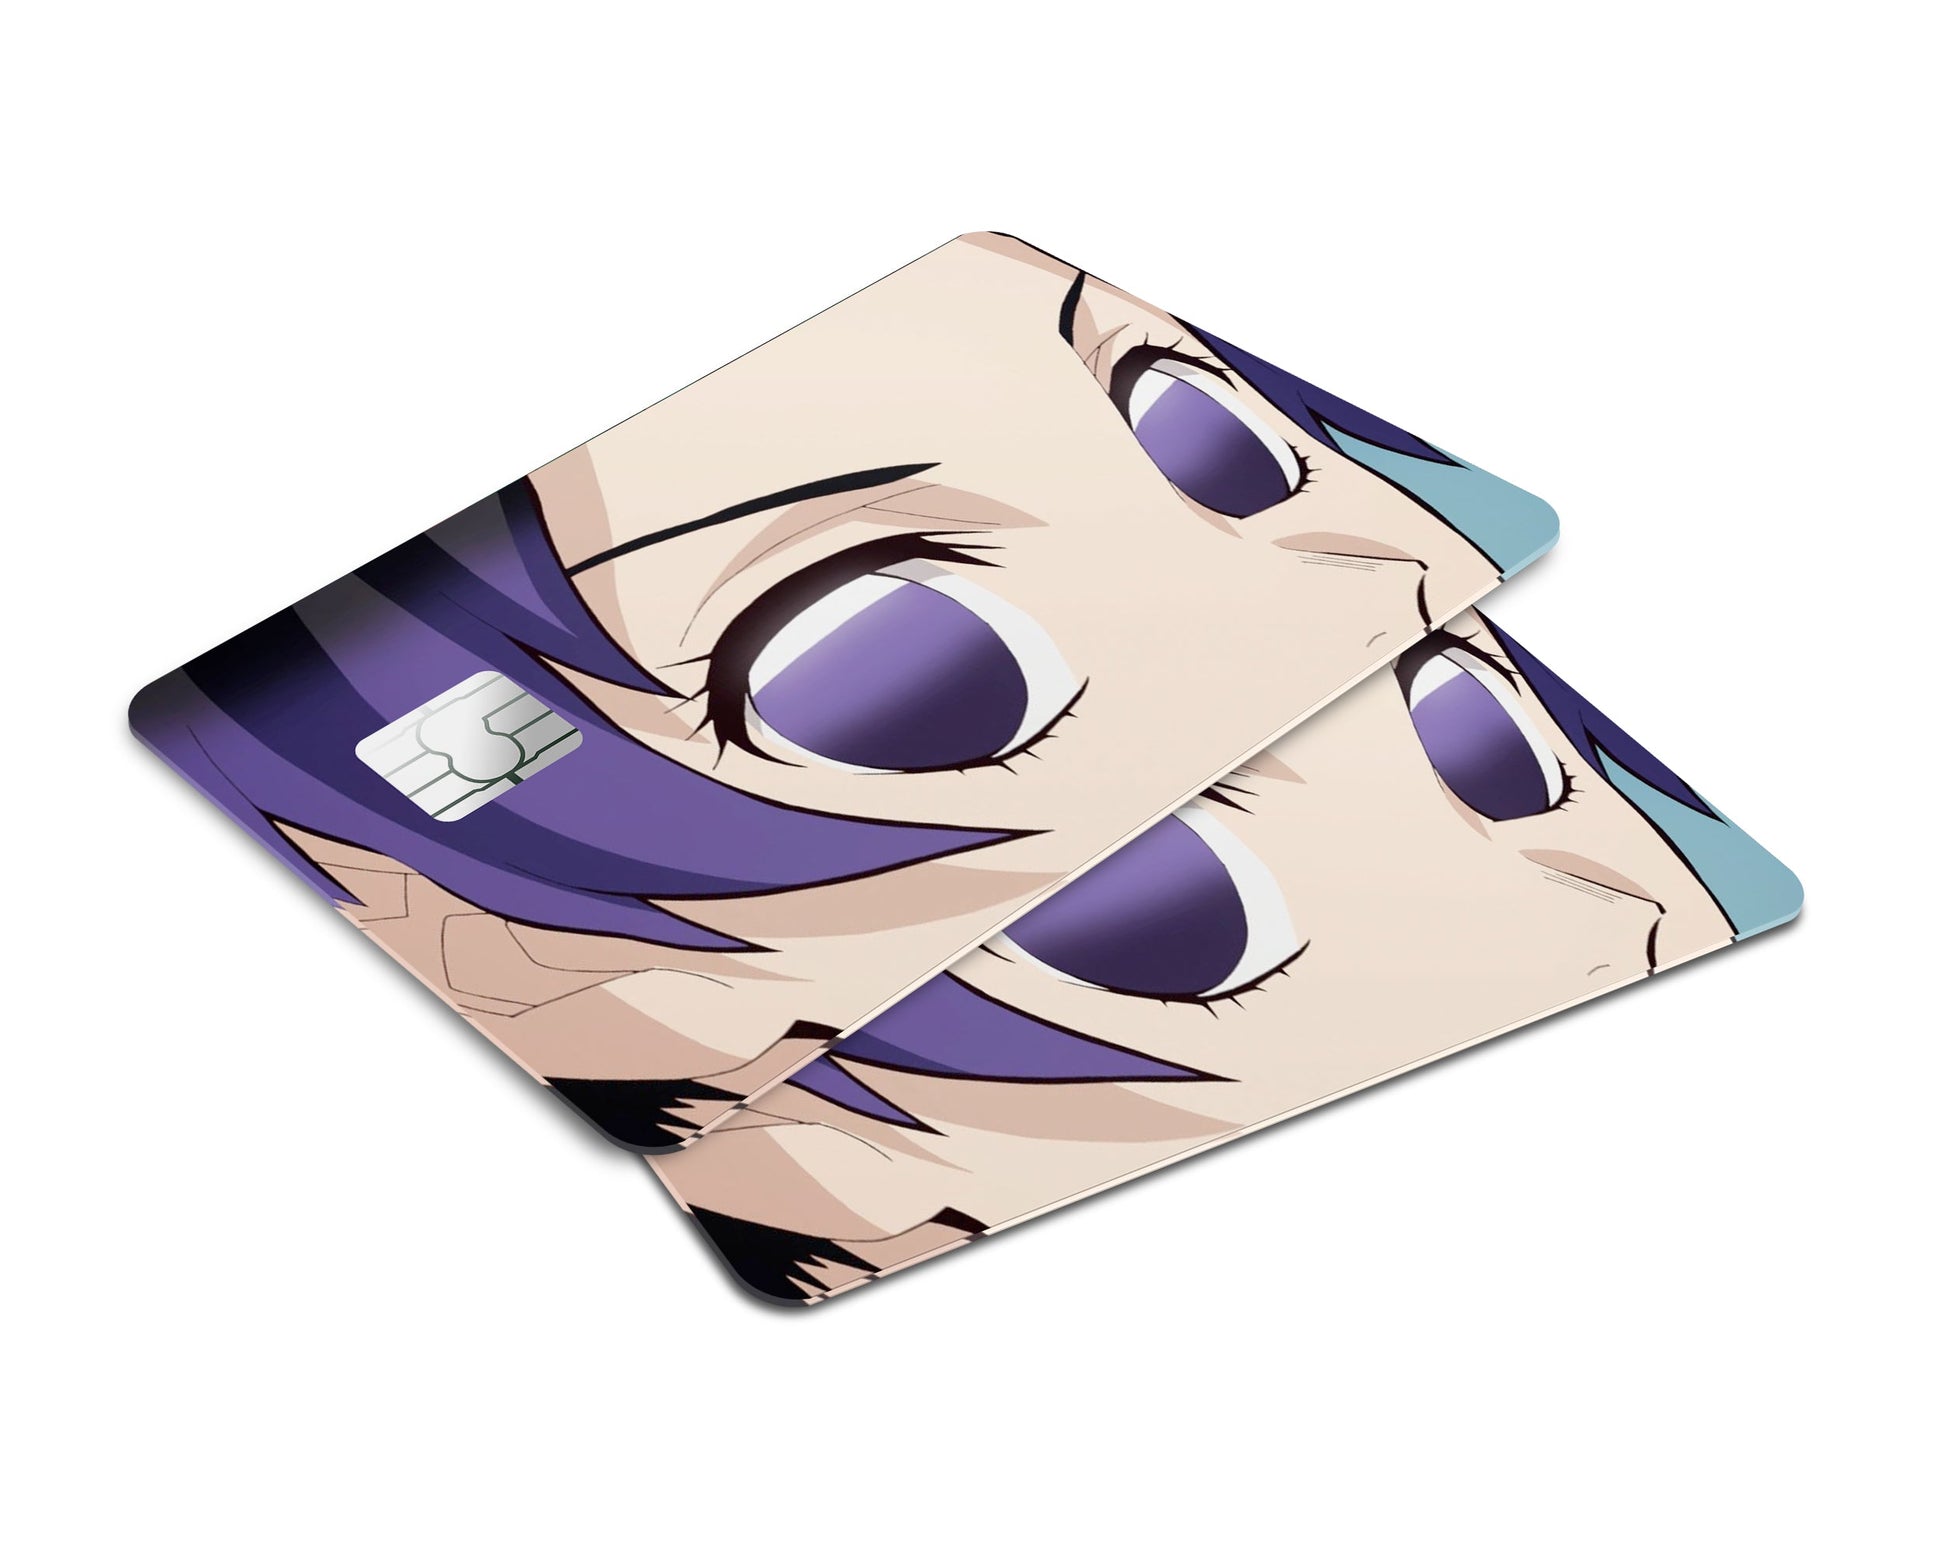 Anime Town Creations Credit Card Demon Slayer Shinobu Eyes Window Skins - Anime Demon Slayer Credit Card Skin